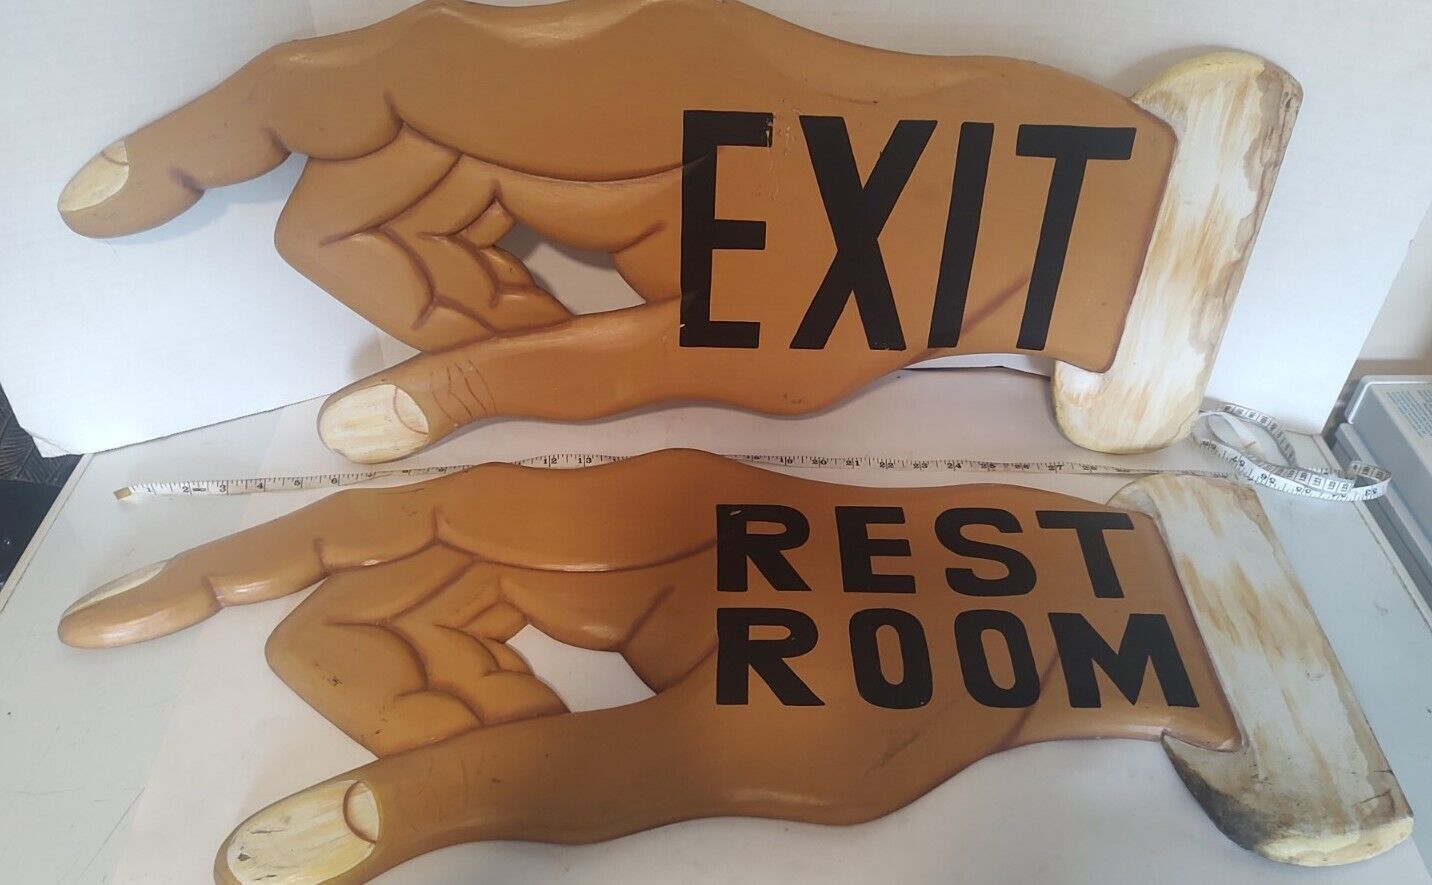 Vintage Handmade Folk Art Exit And Restroom Signs Pointing Fingers